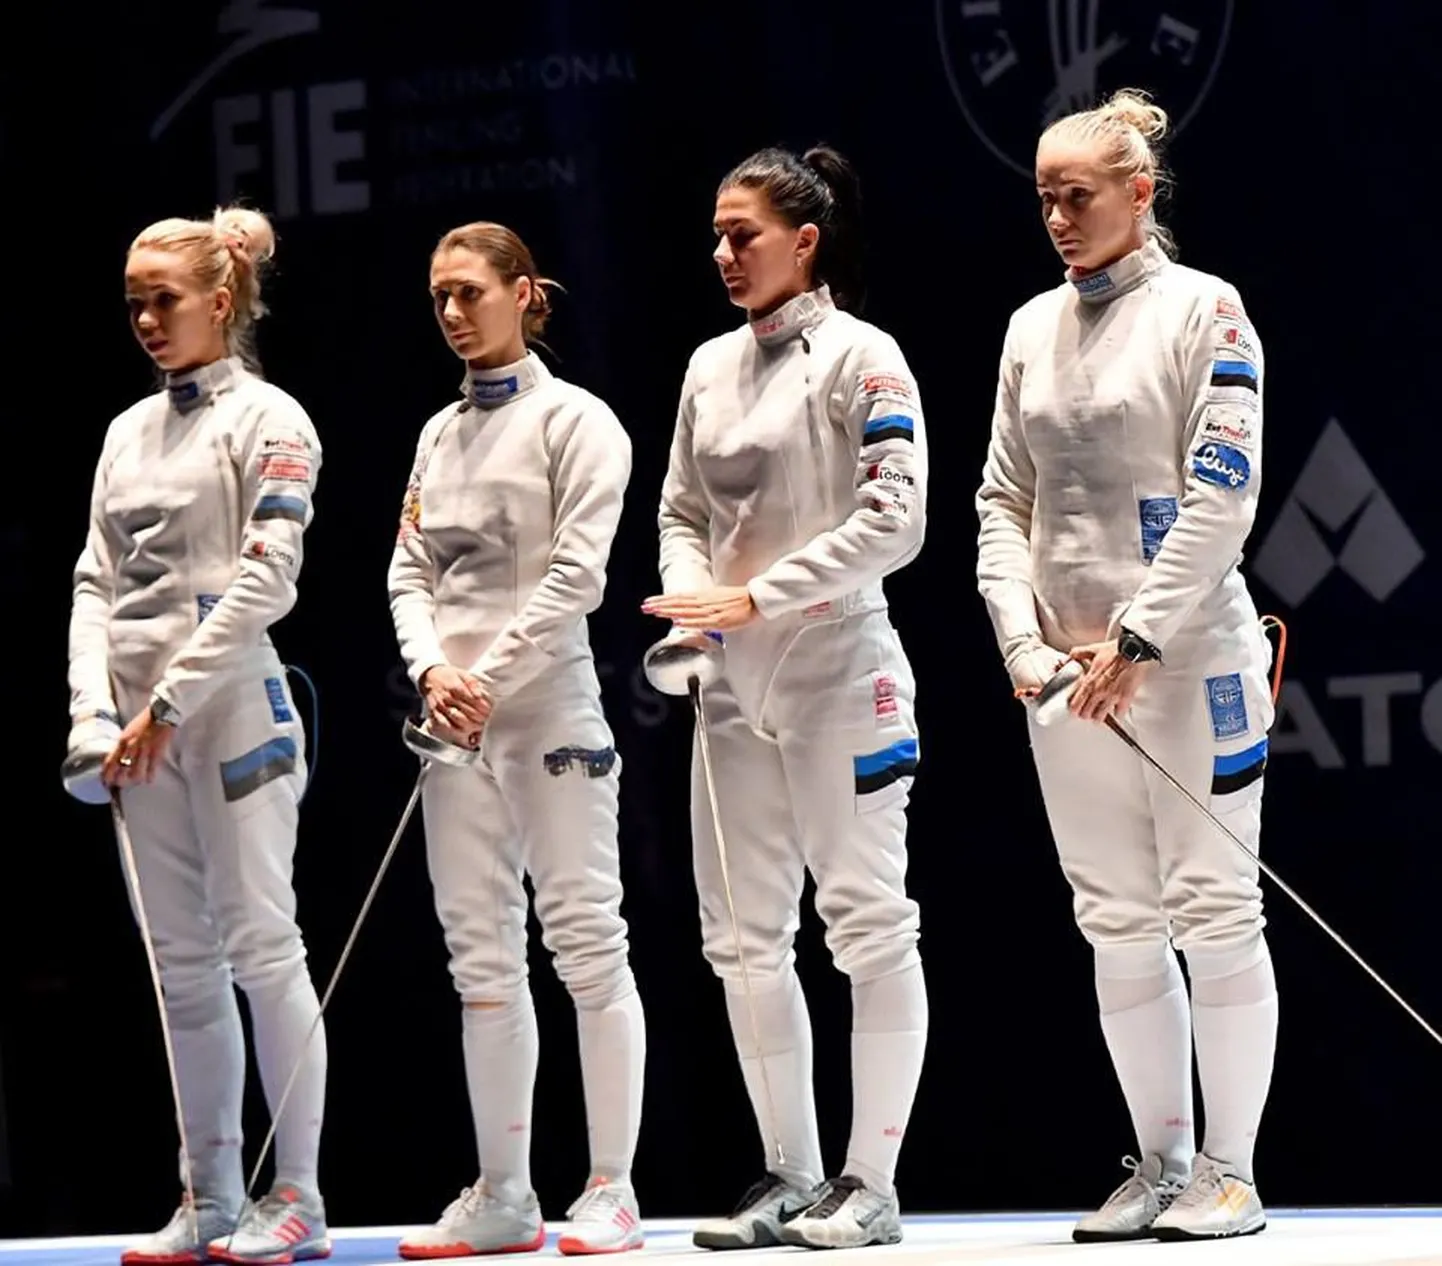 Eesti epeenaiskond (Irina Embrich, Erika Kirpu, Julia Beljajeva, Kristina Kuusk).